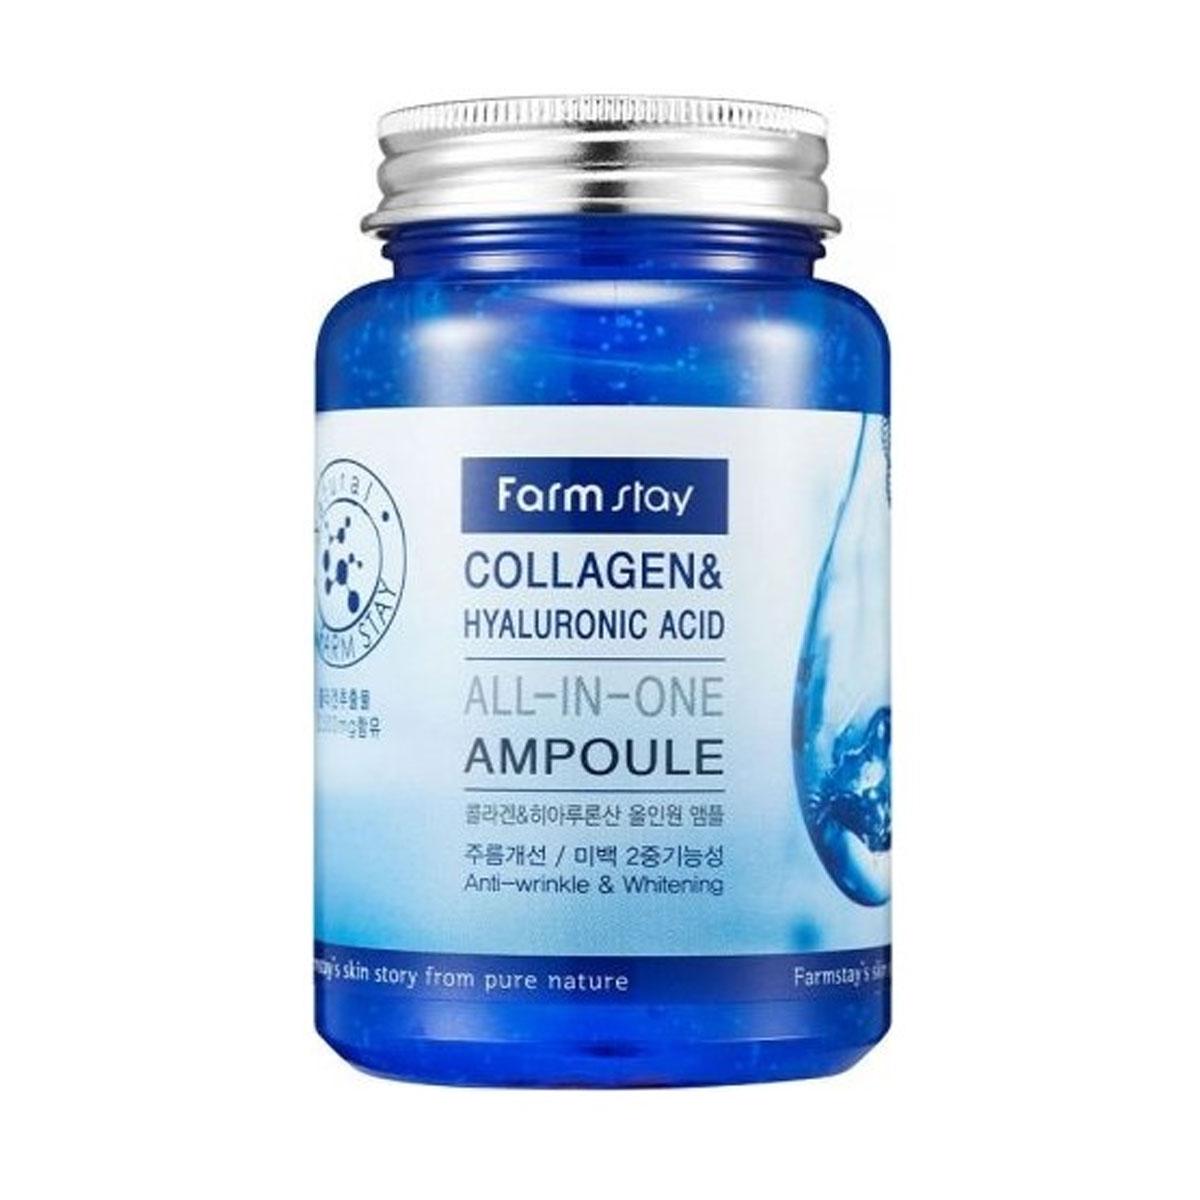  آمپول کلاژن و هیالورونیک اسید - Collagen & hyaluronic asid all in one ampoule